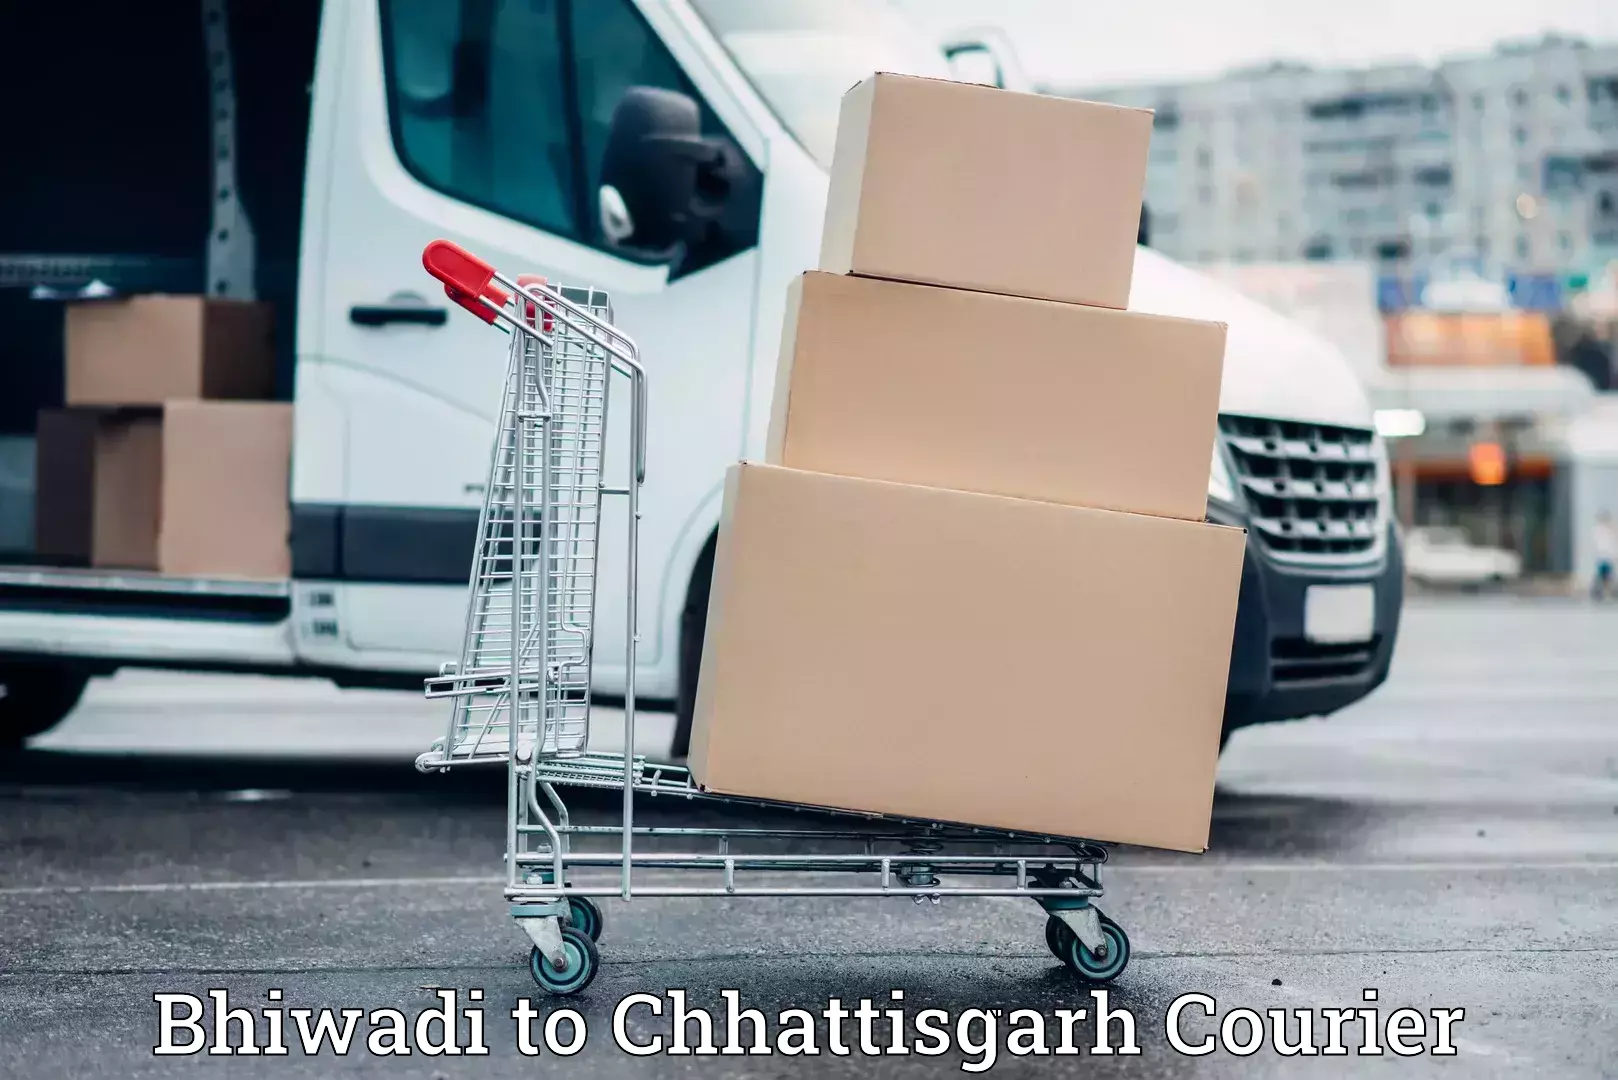 Trusted moving company Bhiwadi to Chhattisgarh